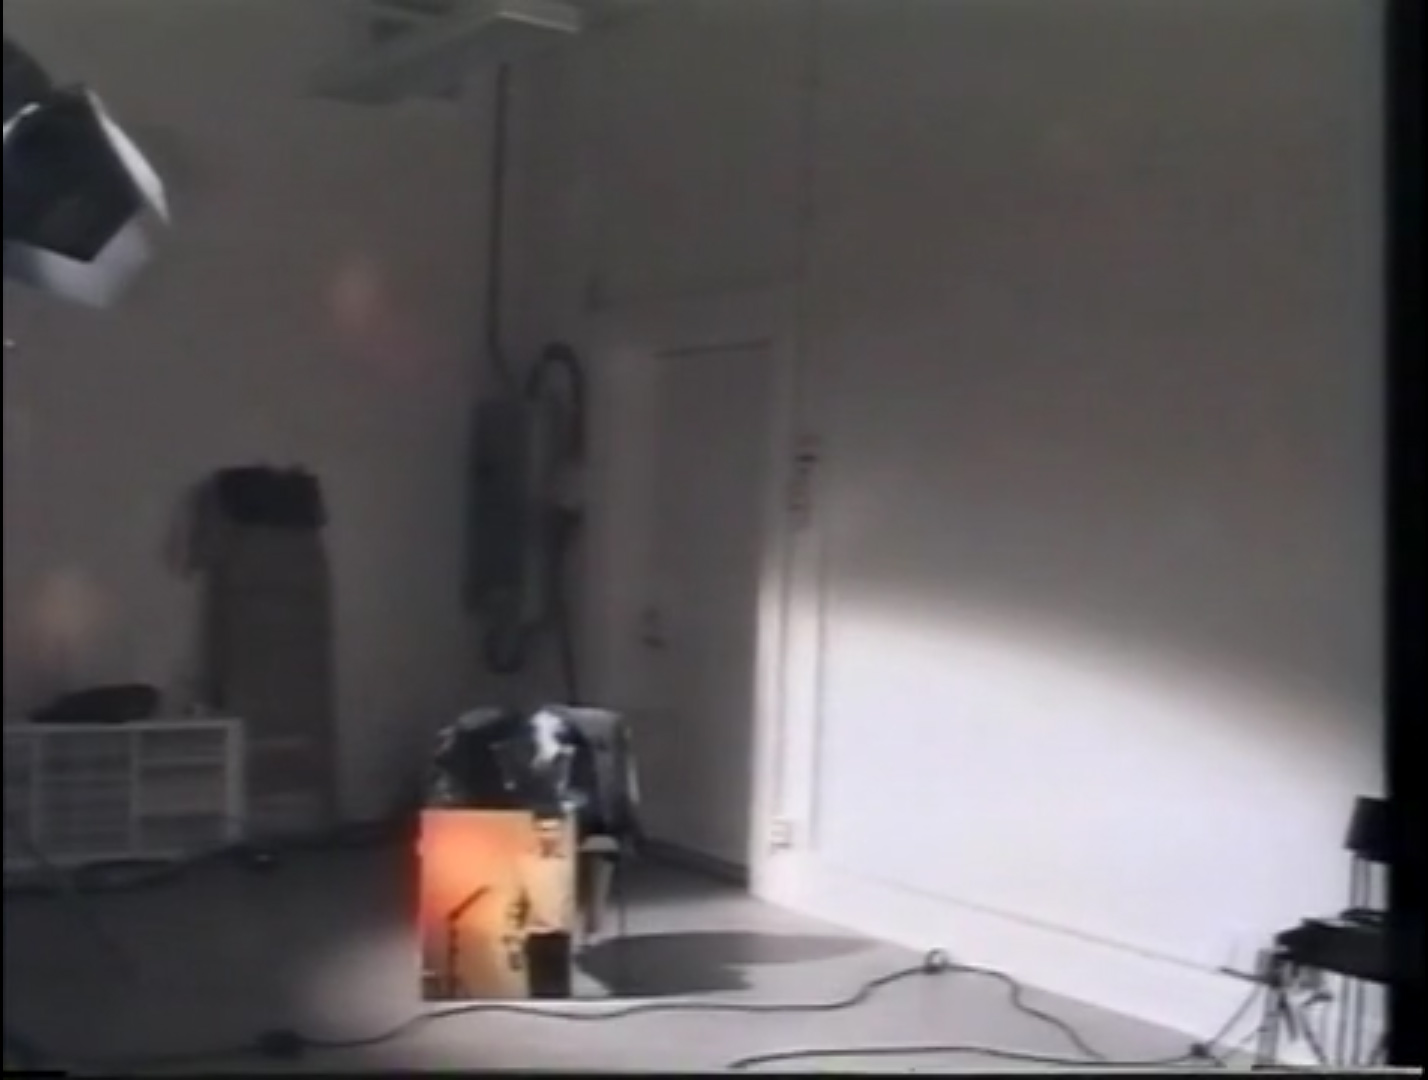 Sirous Namazi, Sirous Telling Jokes, 1996, 5:14 minutes, Video Courtesy of Galerie Nordenhake, Images Courtesy of Delgosha Gallery & the artist